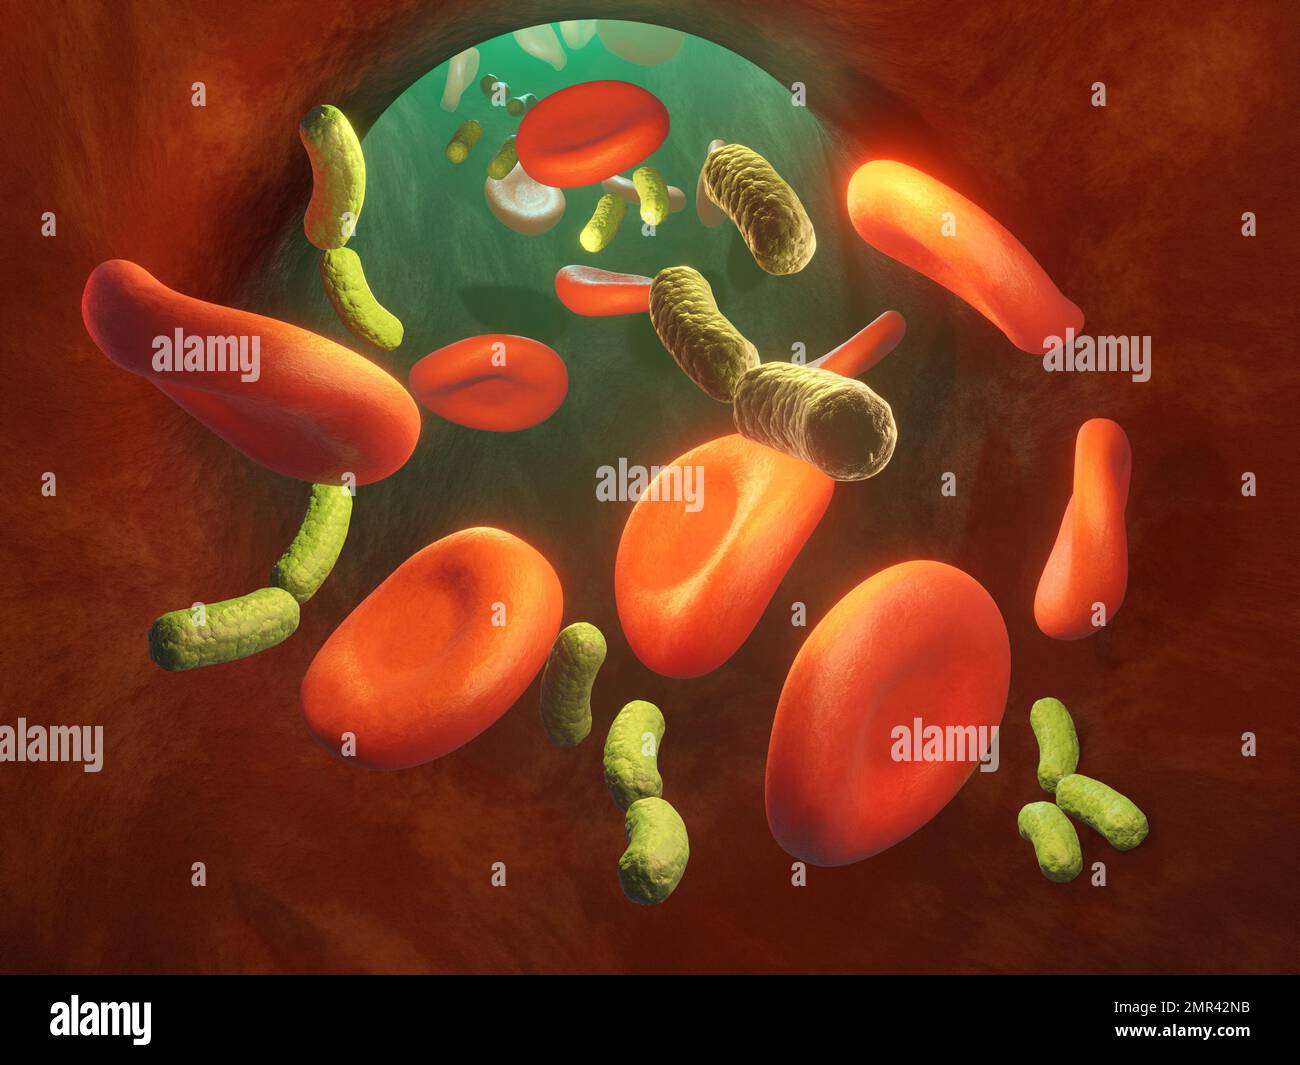 Bacterial infection inside a blood vessel. Digital illustration, 3D rendering. Stock Photo